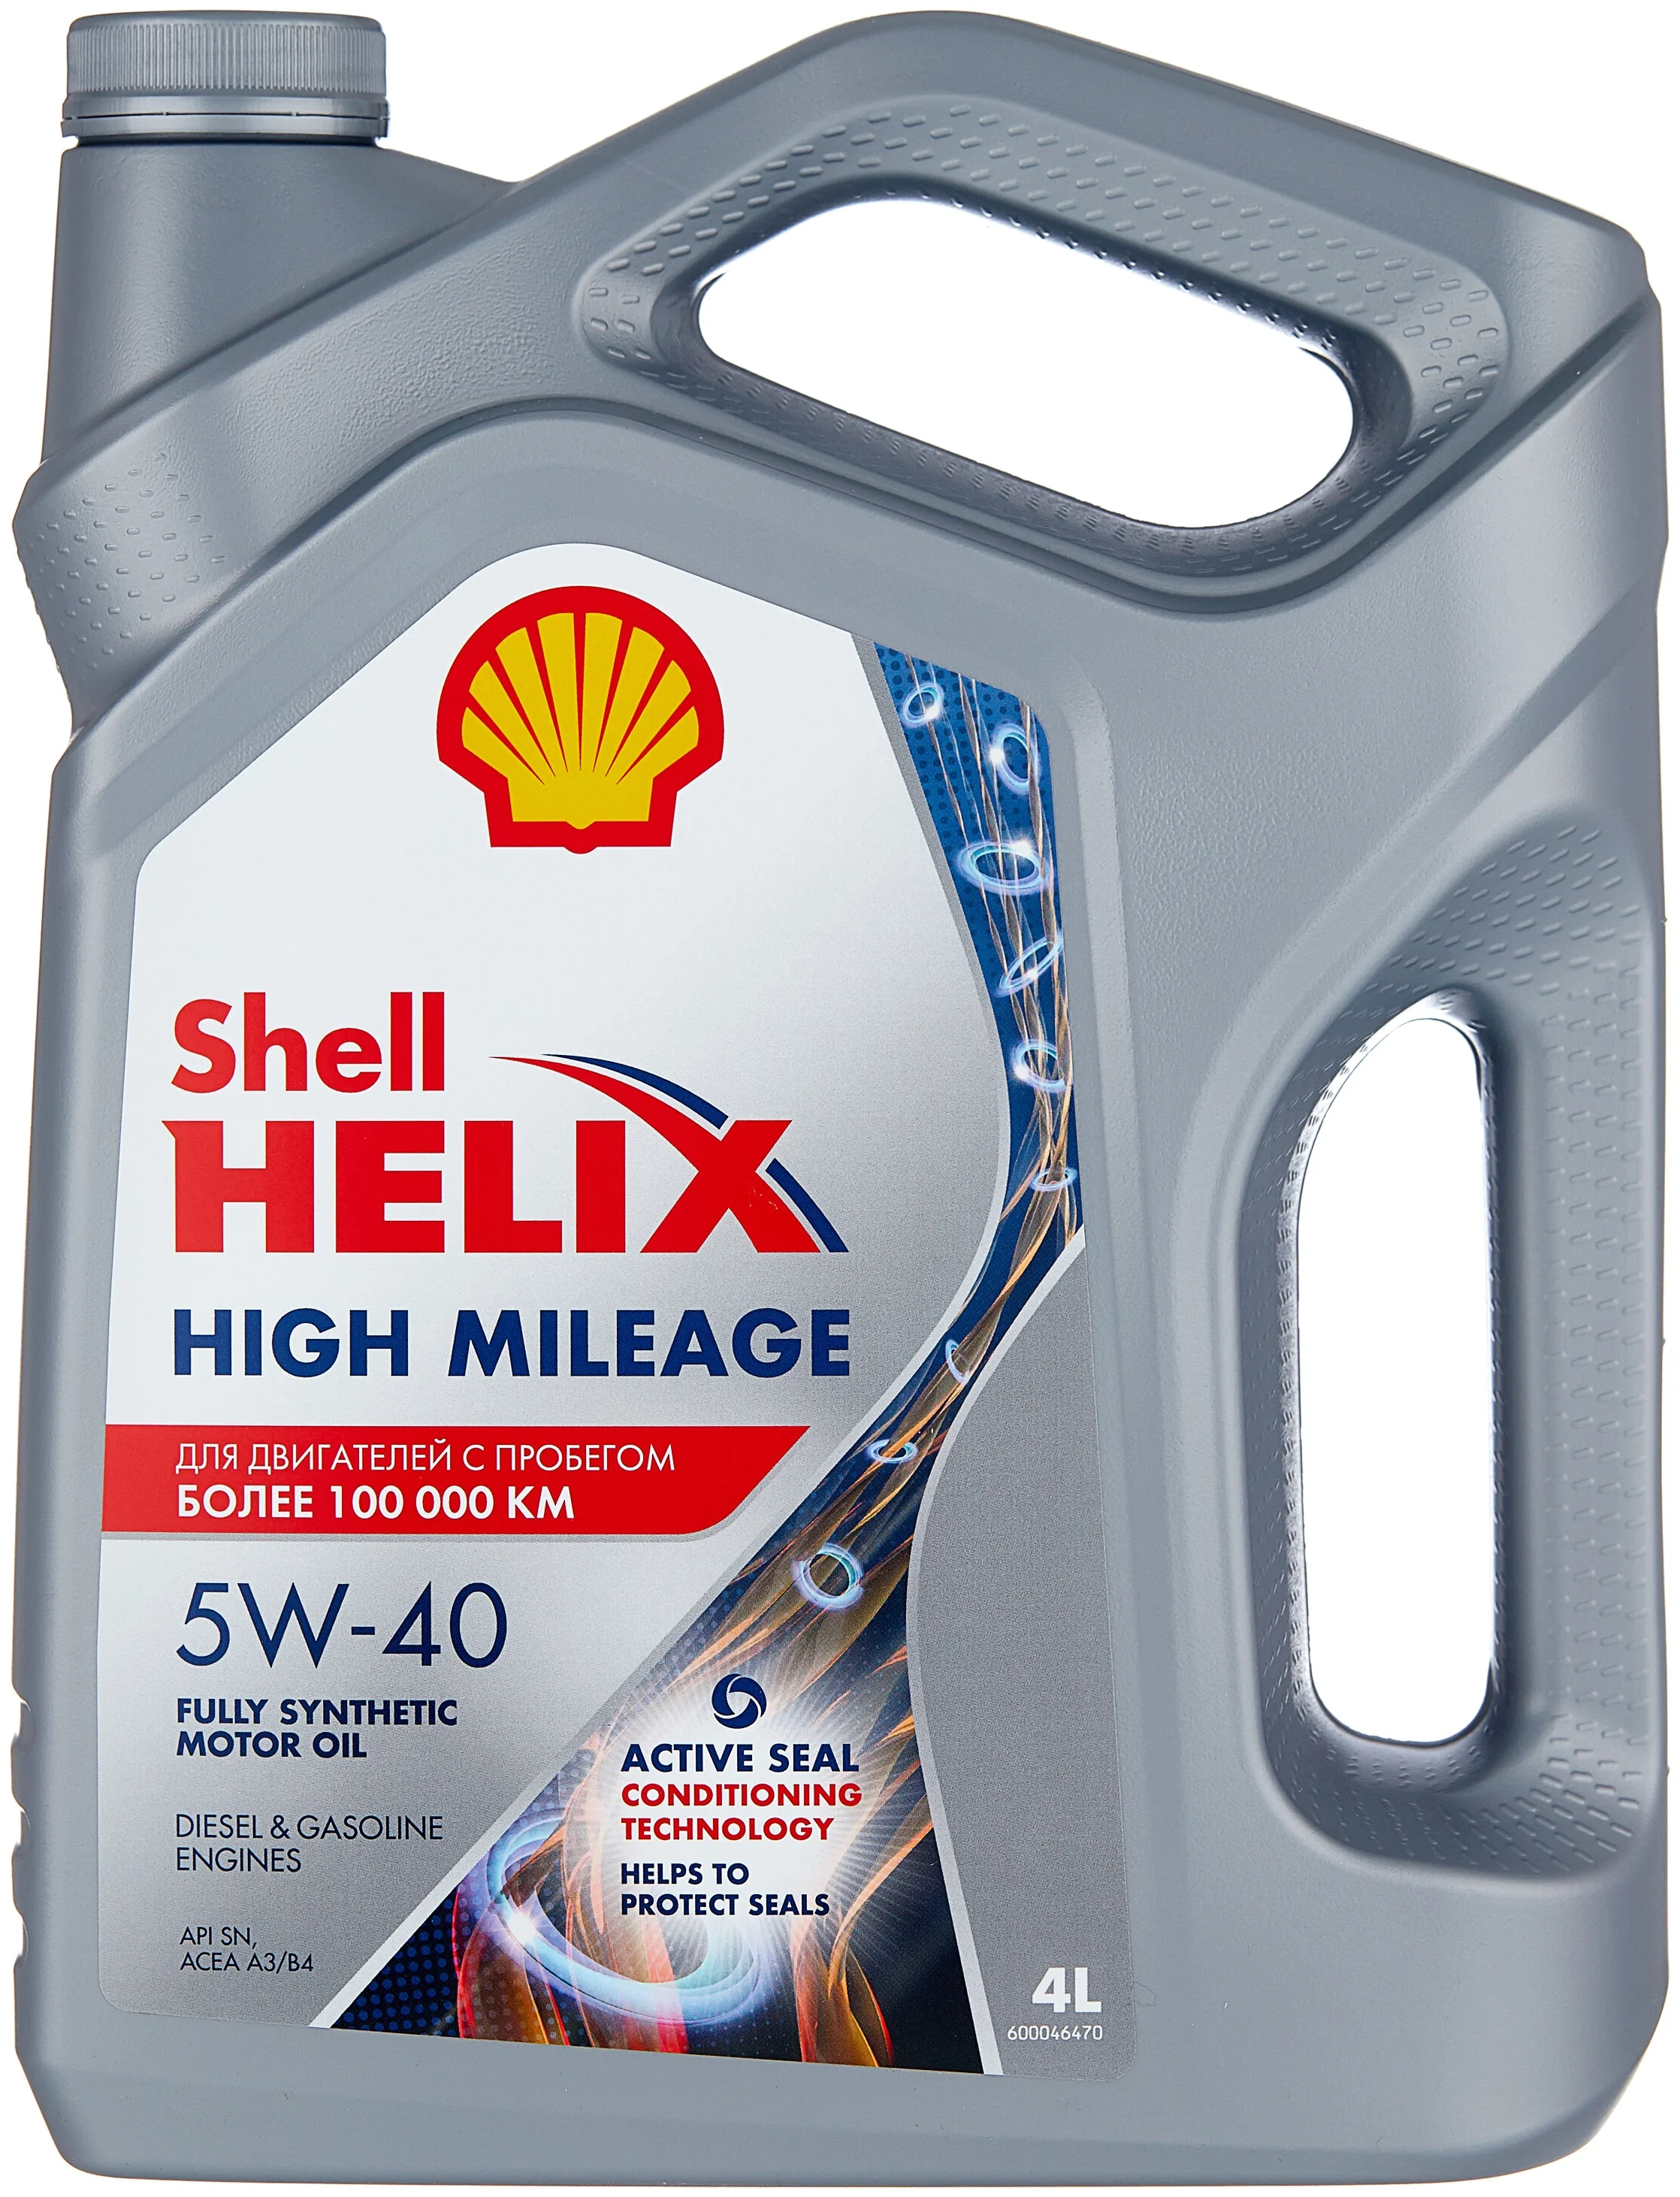 SHELL Helix High Mileage 5W-40 - класс вязкости: 5W-40